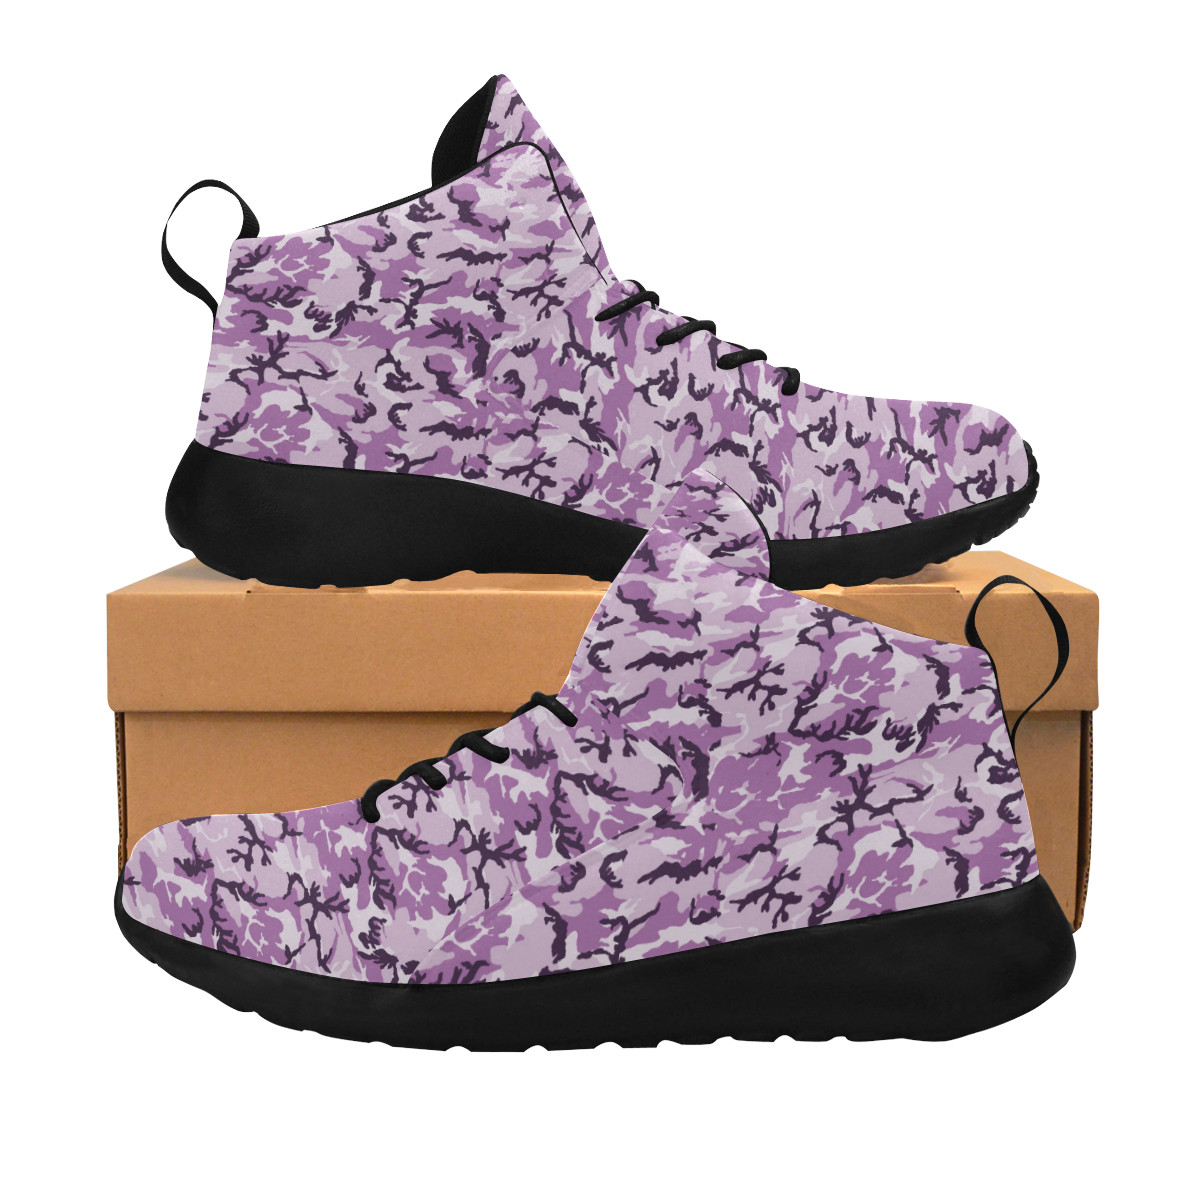 Woodland Pink Purple Camouflage Women's Chukka Training Shoes (Model 57502)